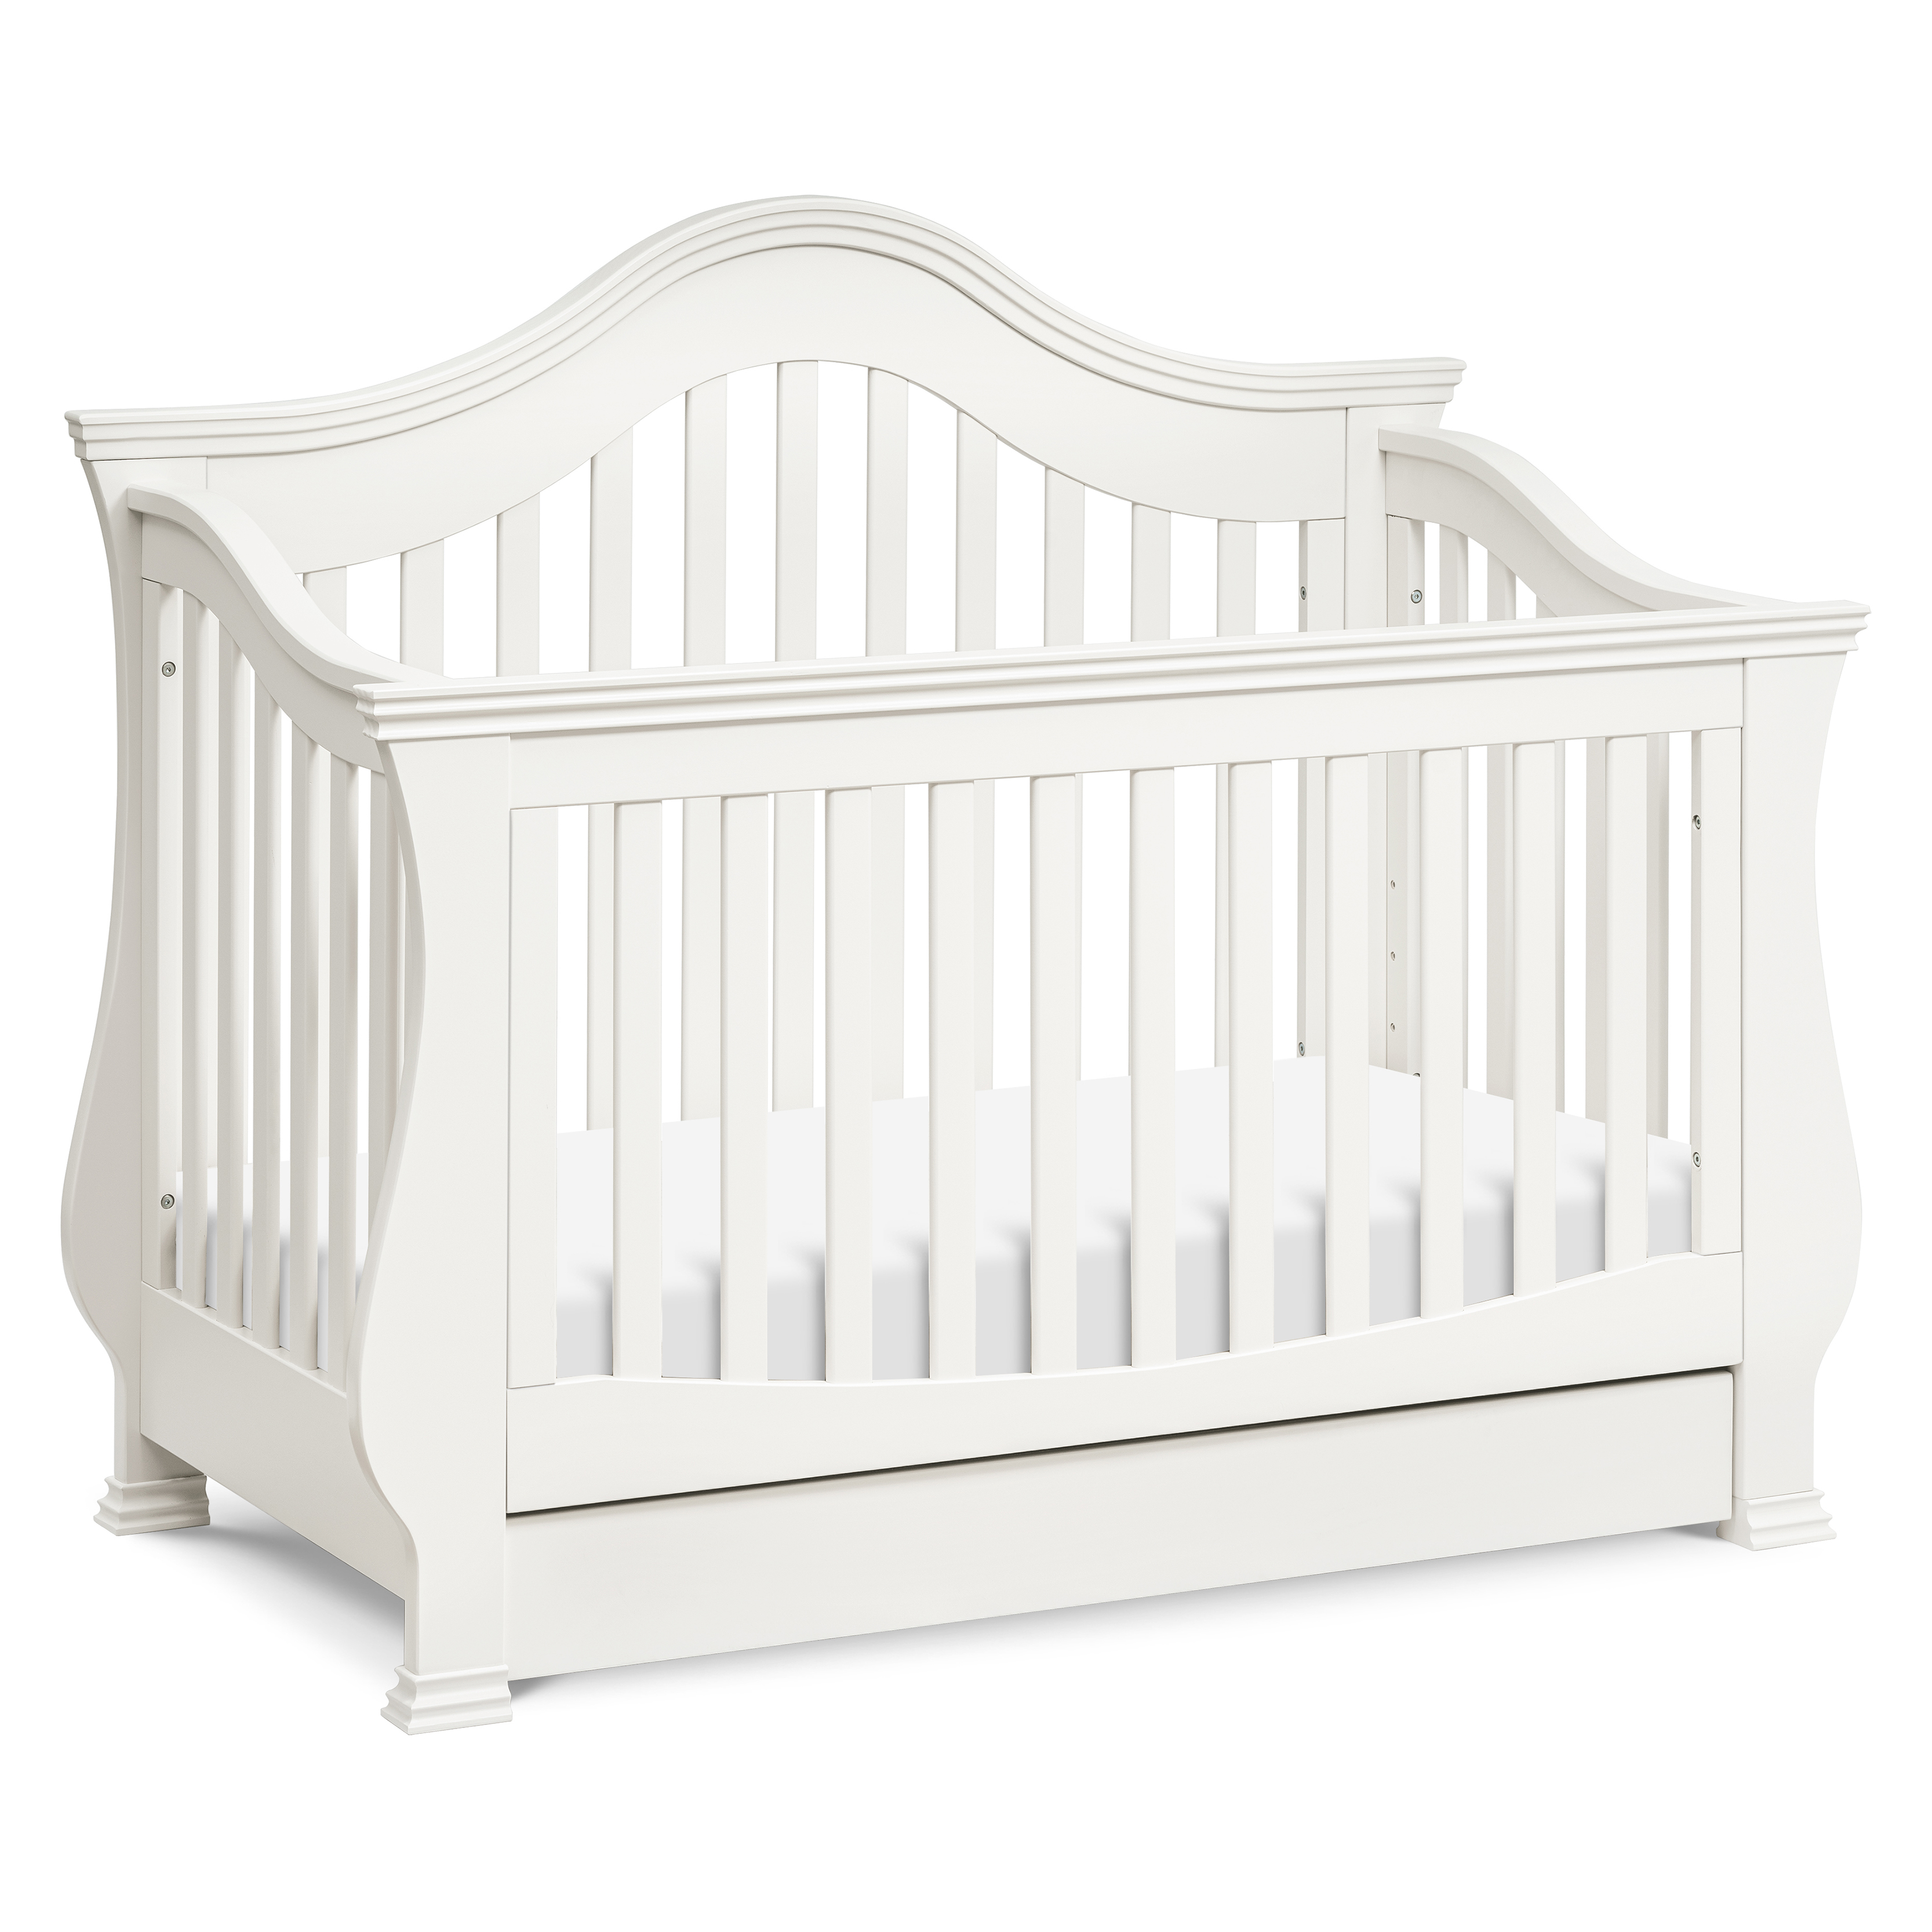 Namesake Ashbury 4-in-1 Convertible Crib in Warm White - image 1 of 6